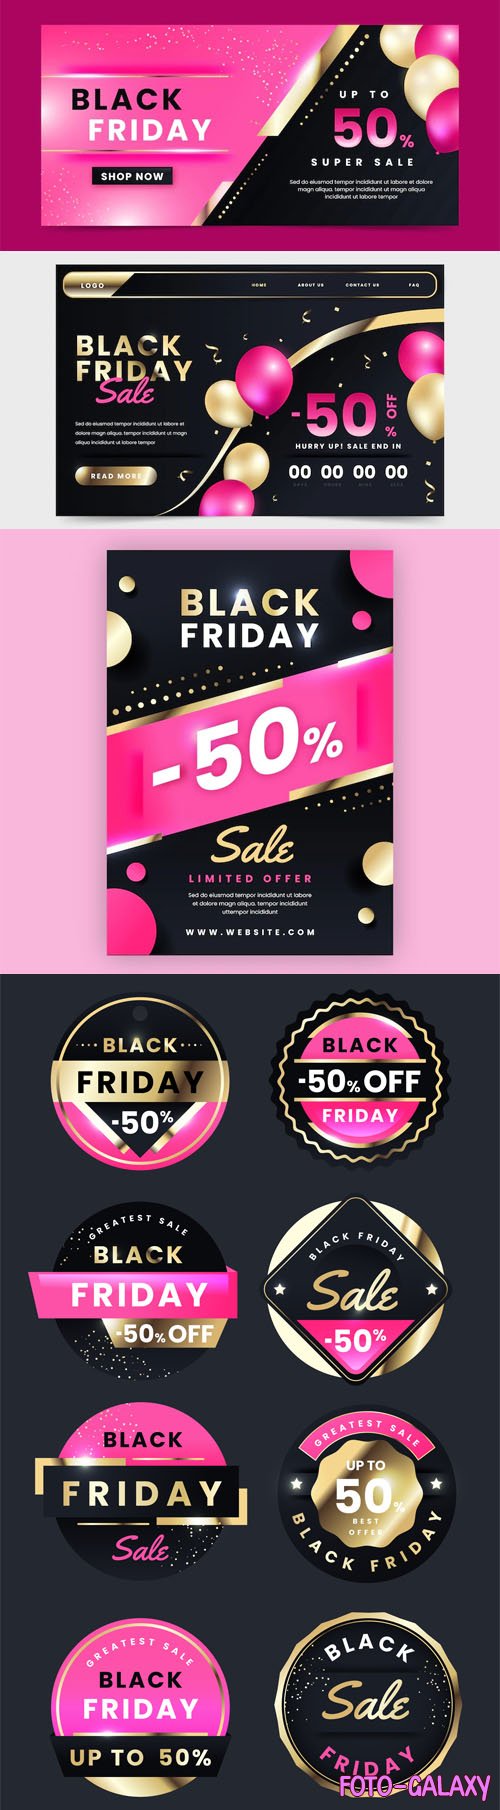 Black Friday - 10 Gradient Pink & Black Vector Templates Pack